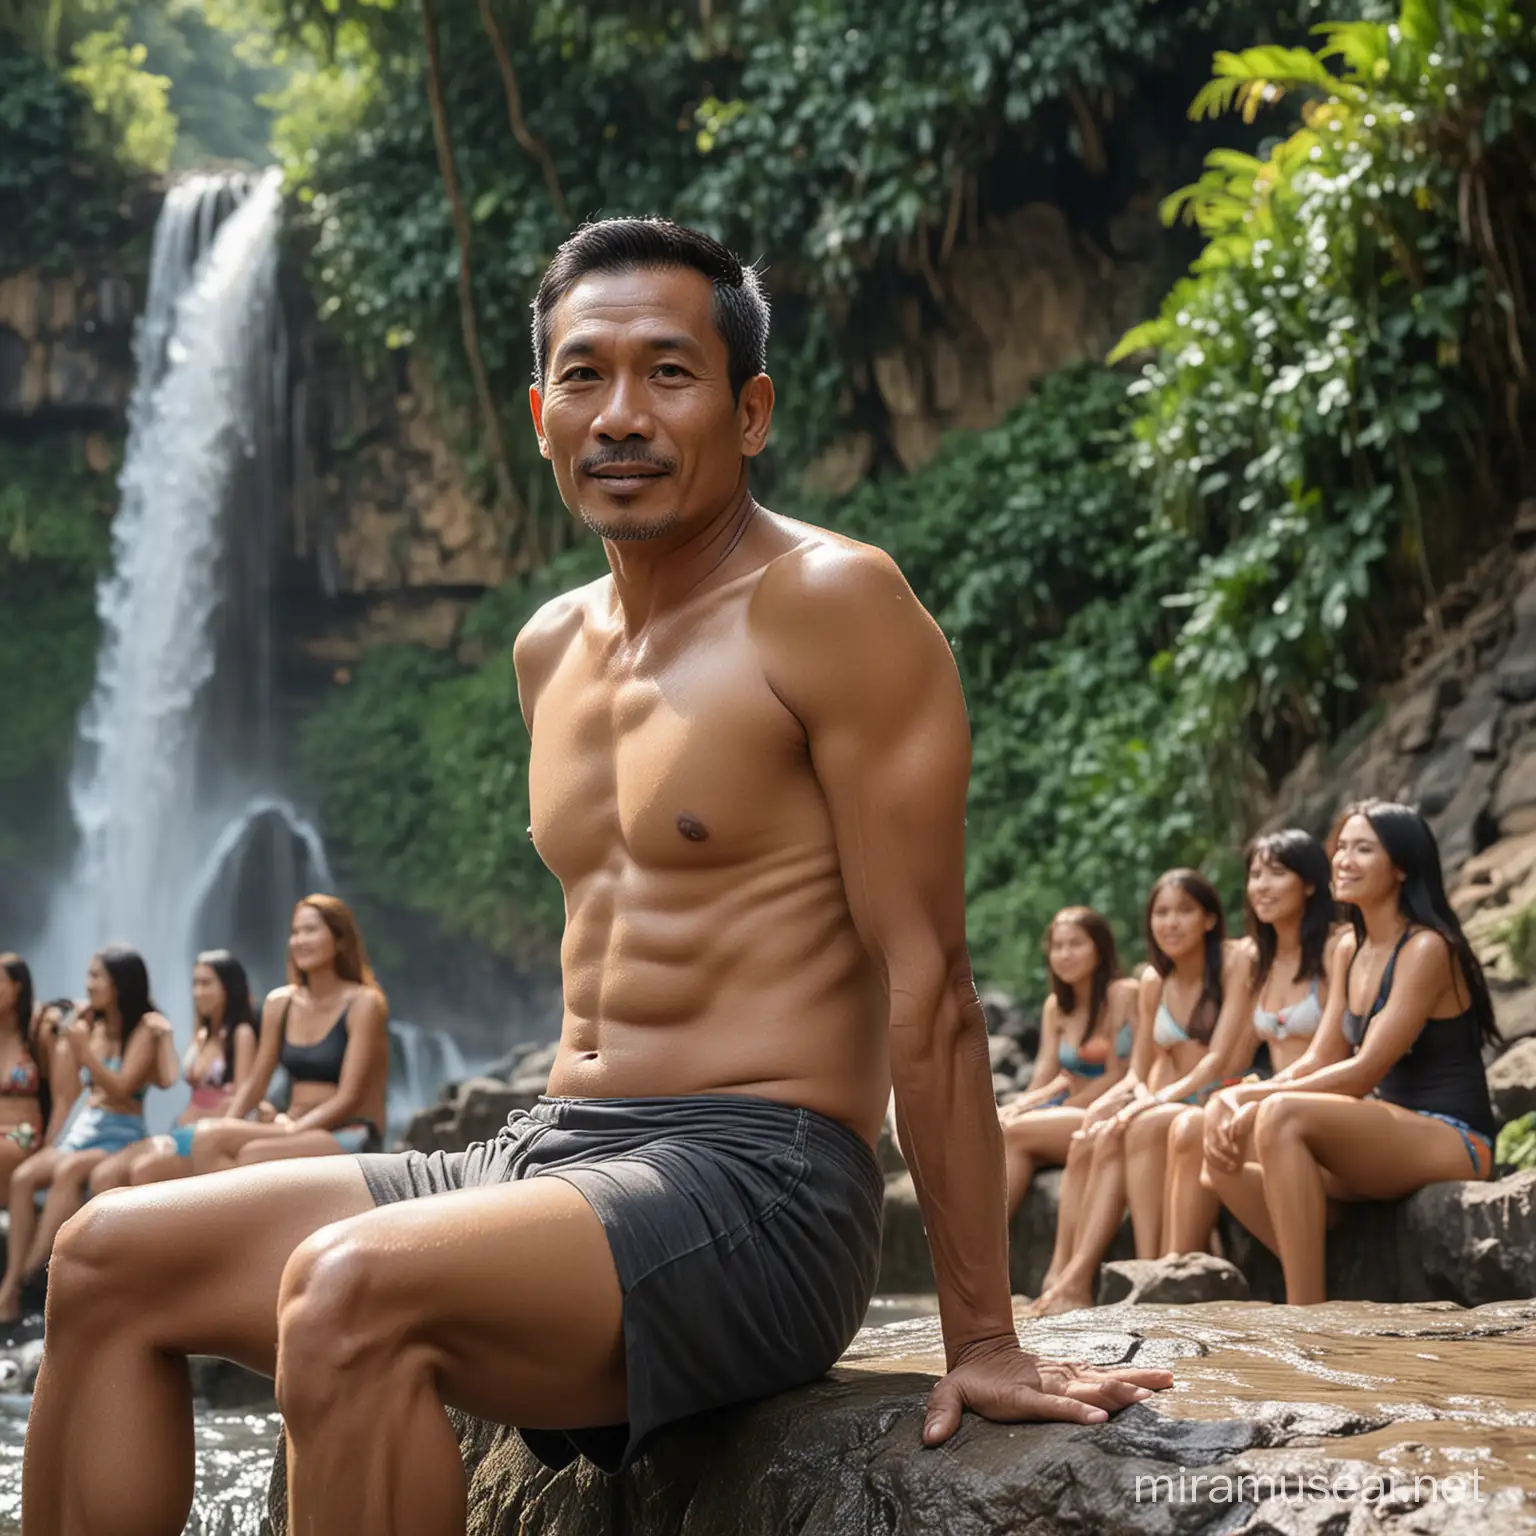 Indonesian Man Enjoying Waterfall View with Beautiful BikiniClad Companions